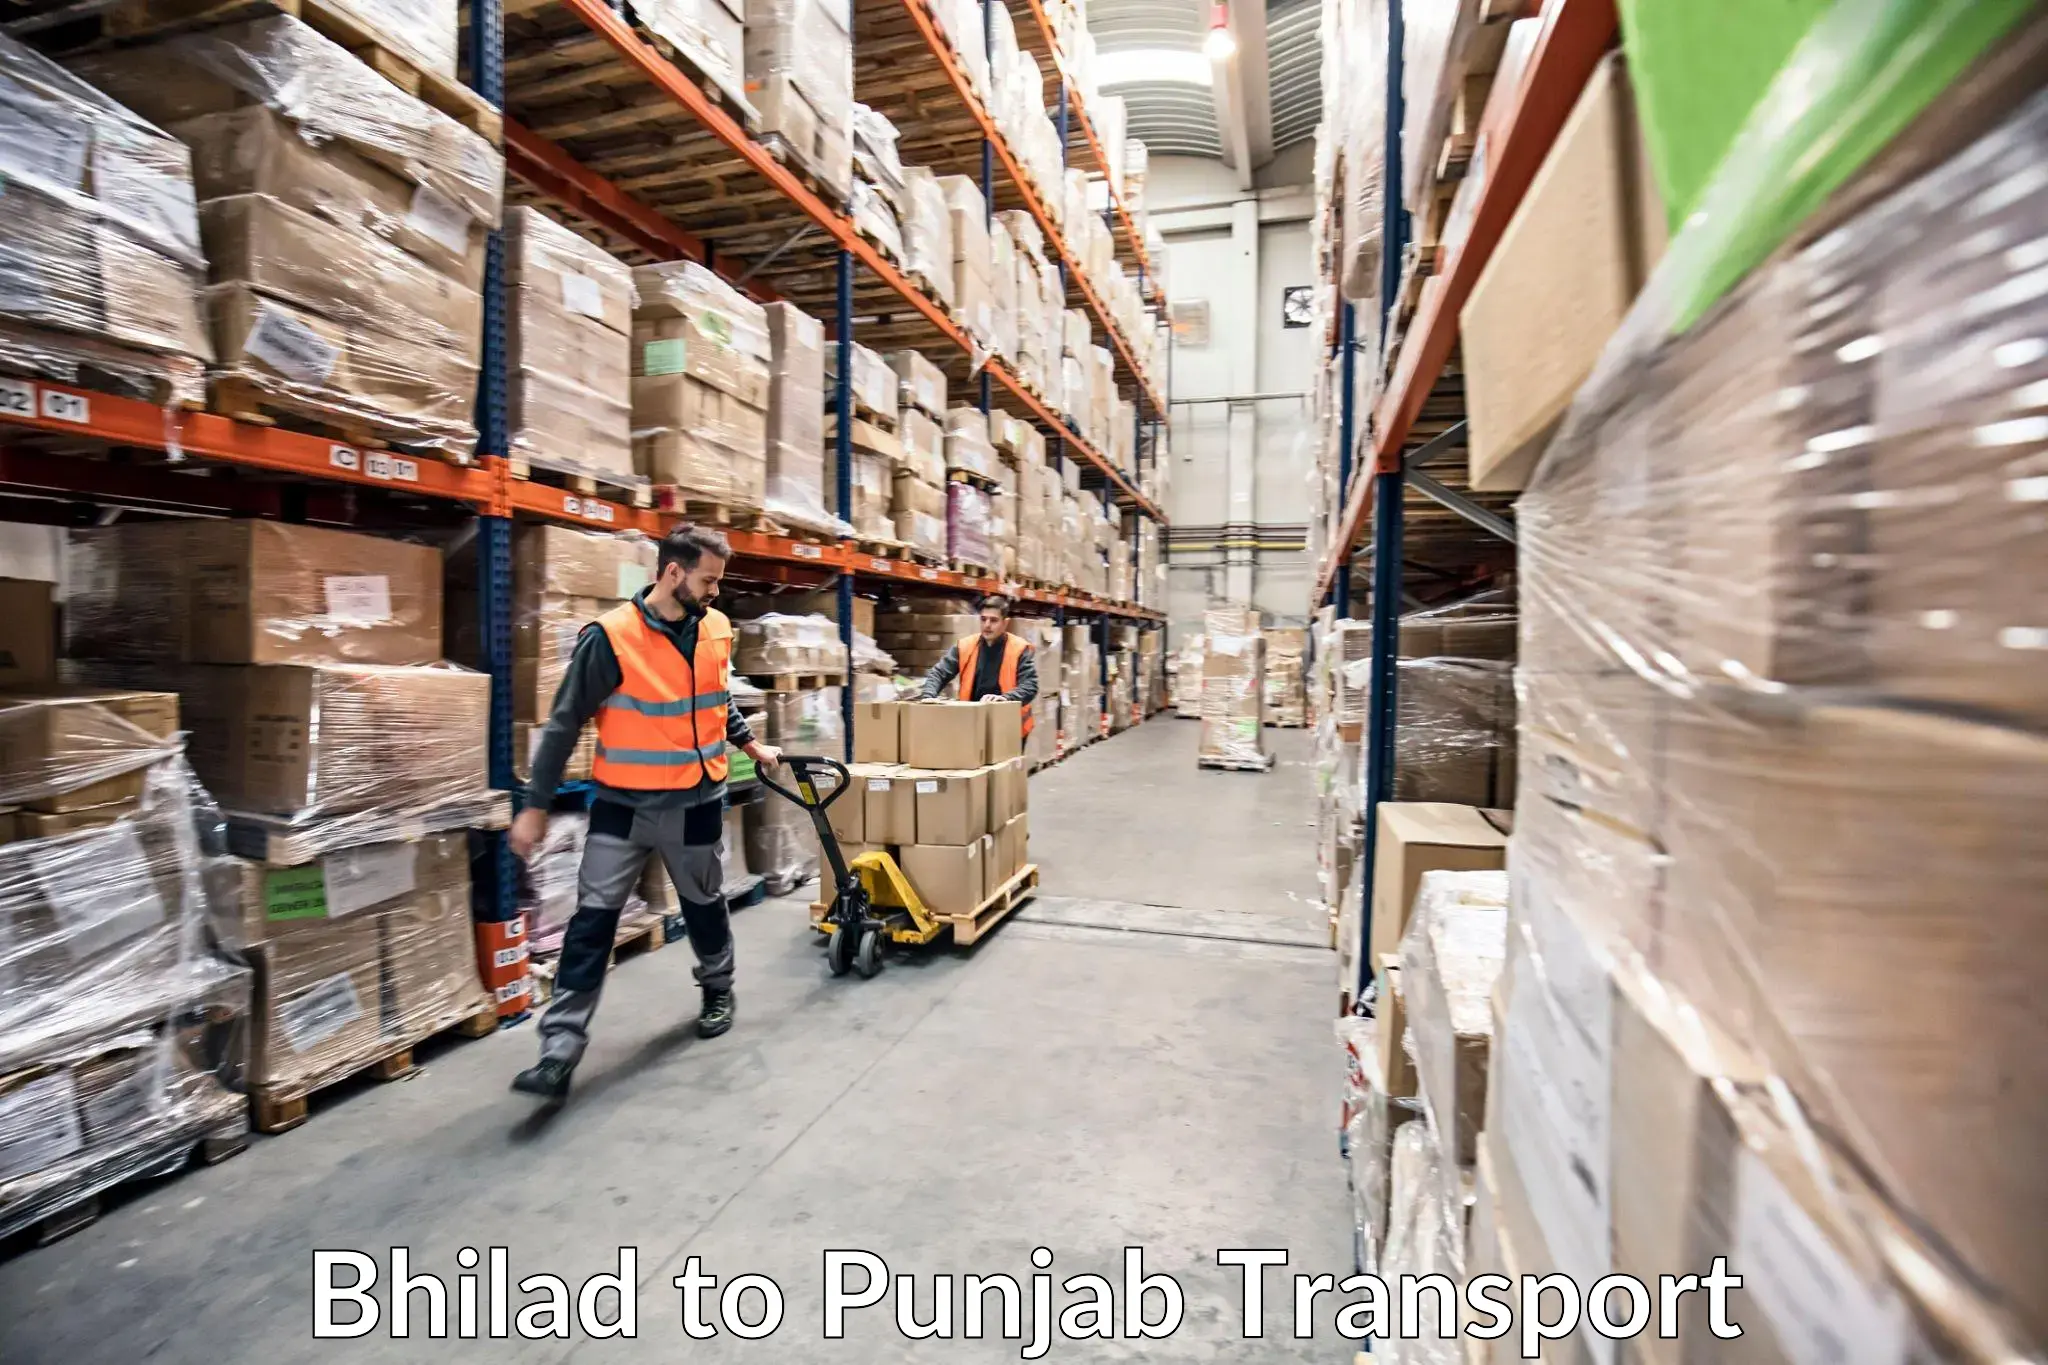 Furniture transport service Bhilad to Punjab